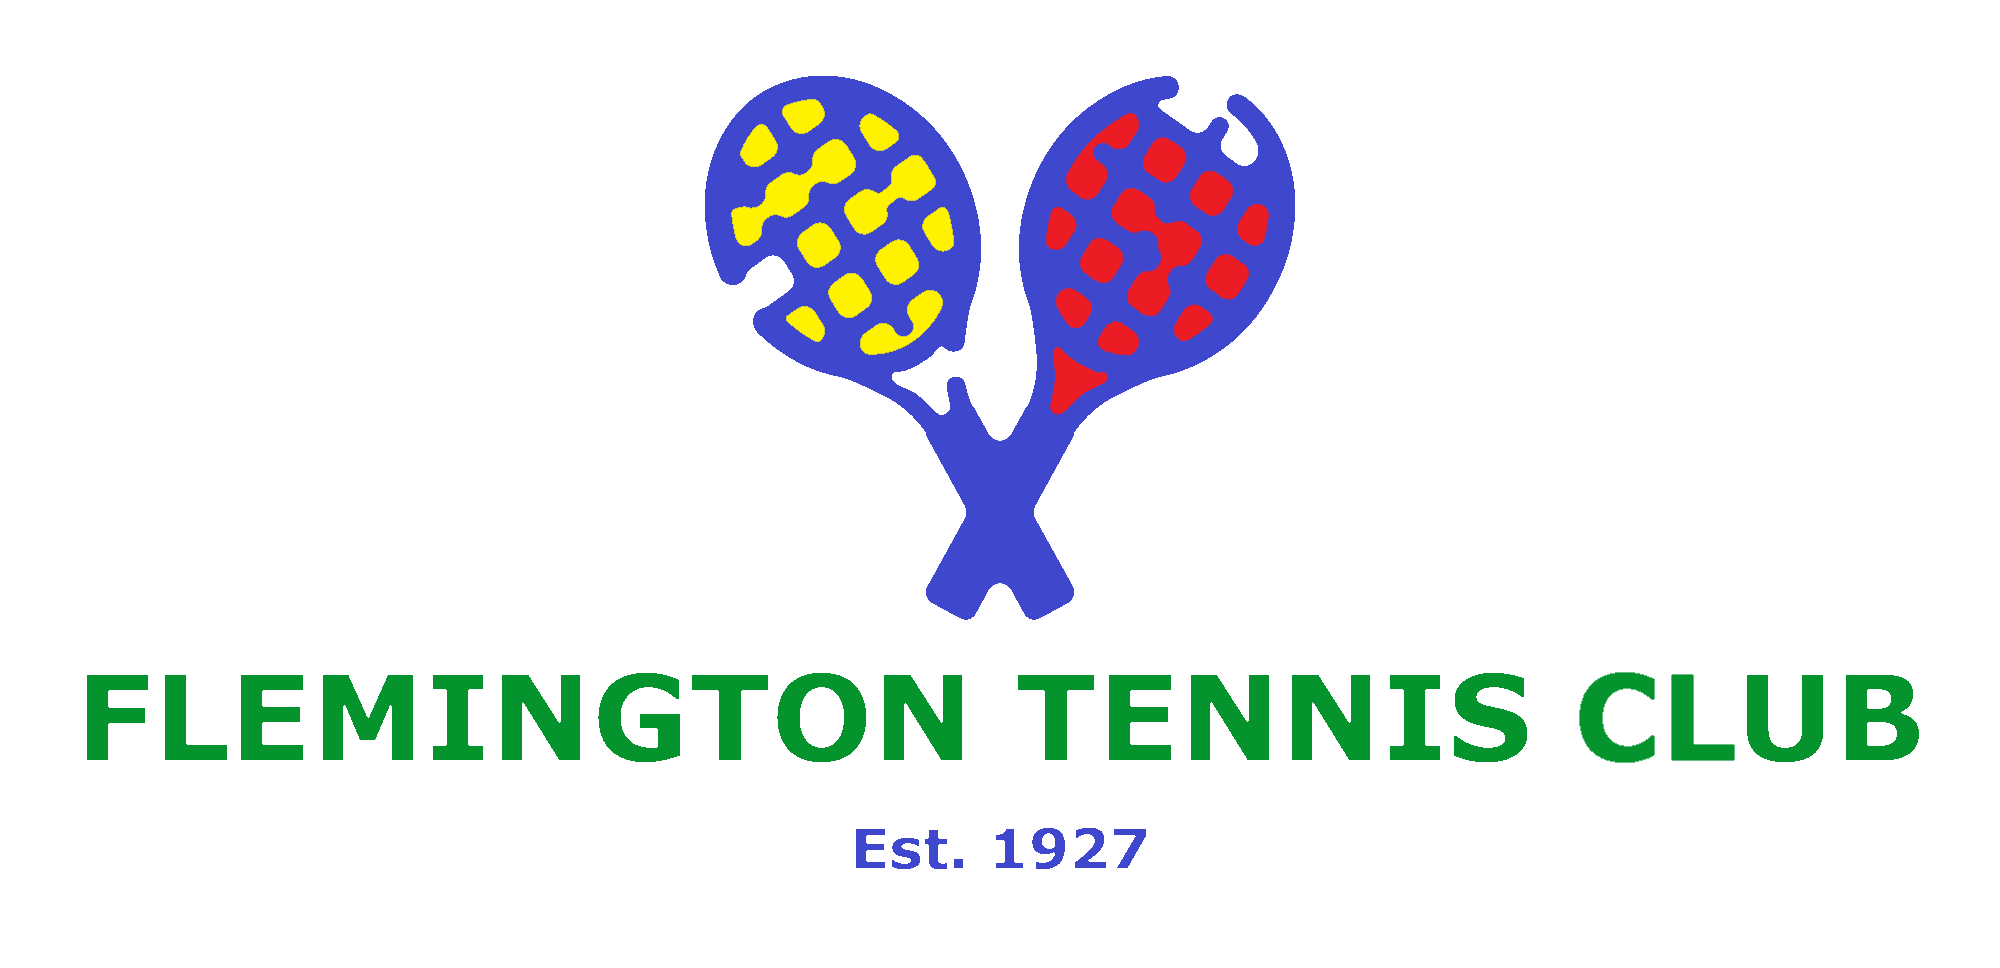 Flemington Tennis Club